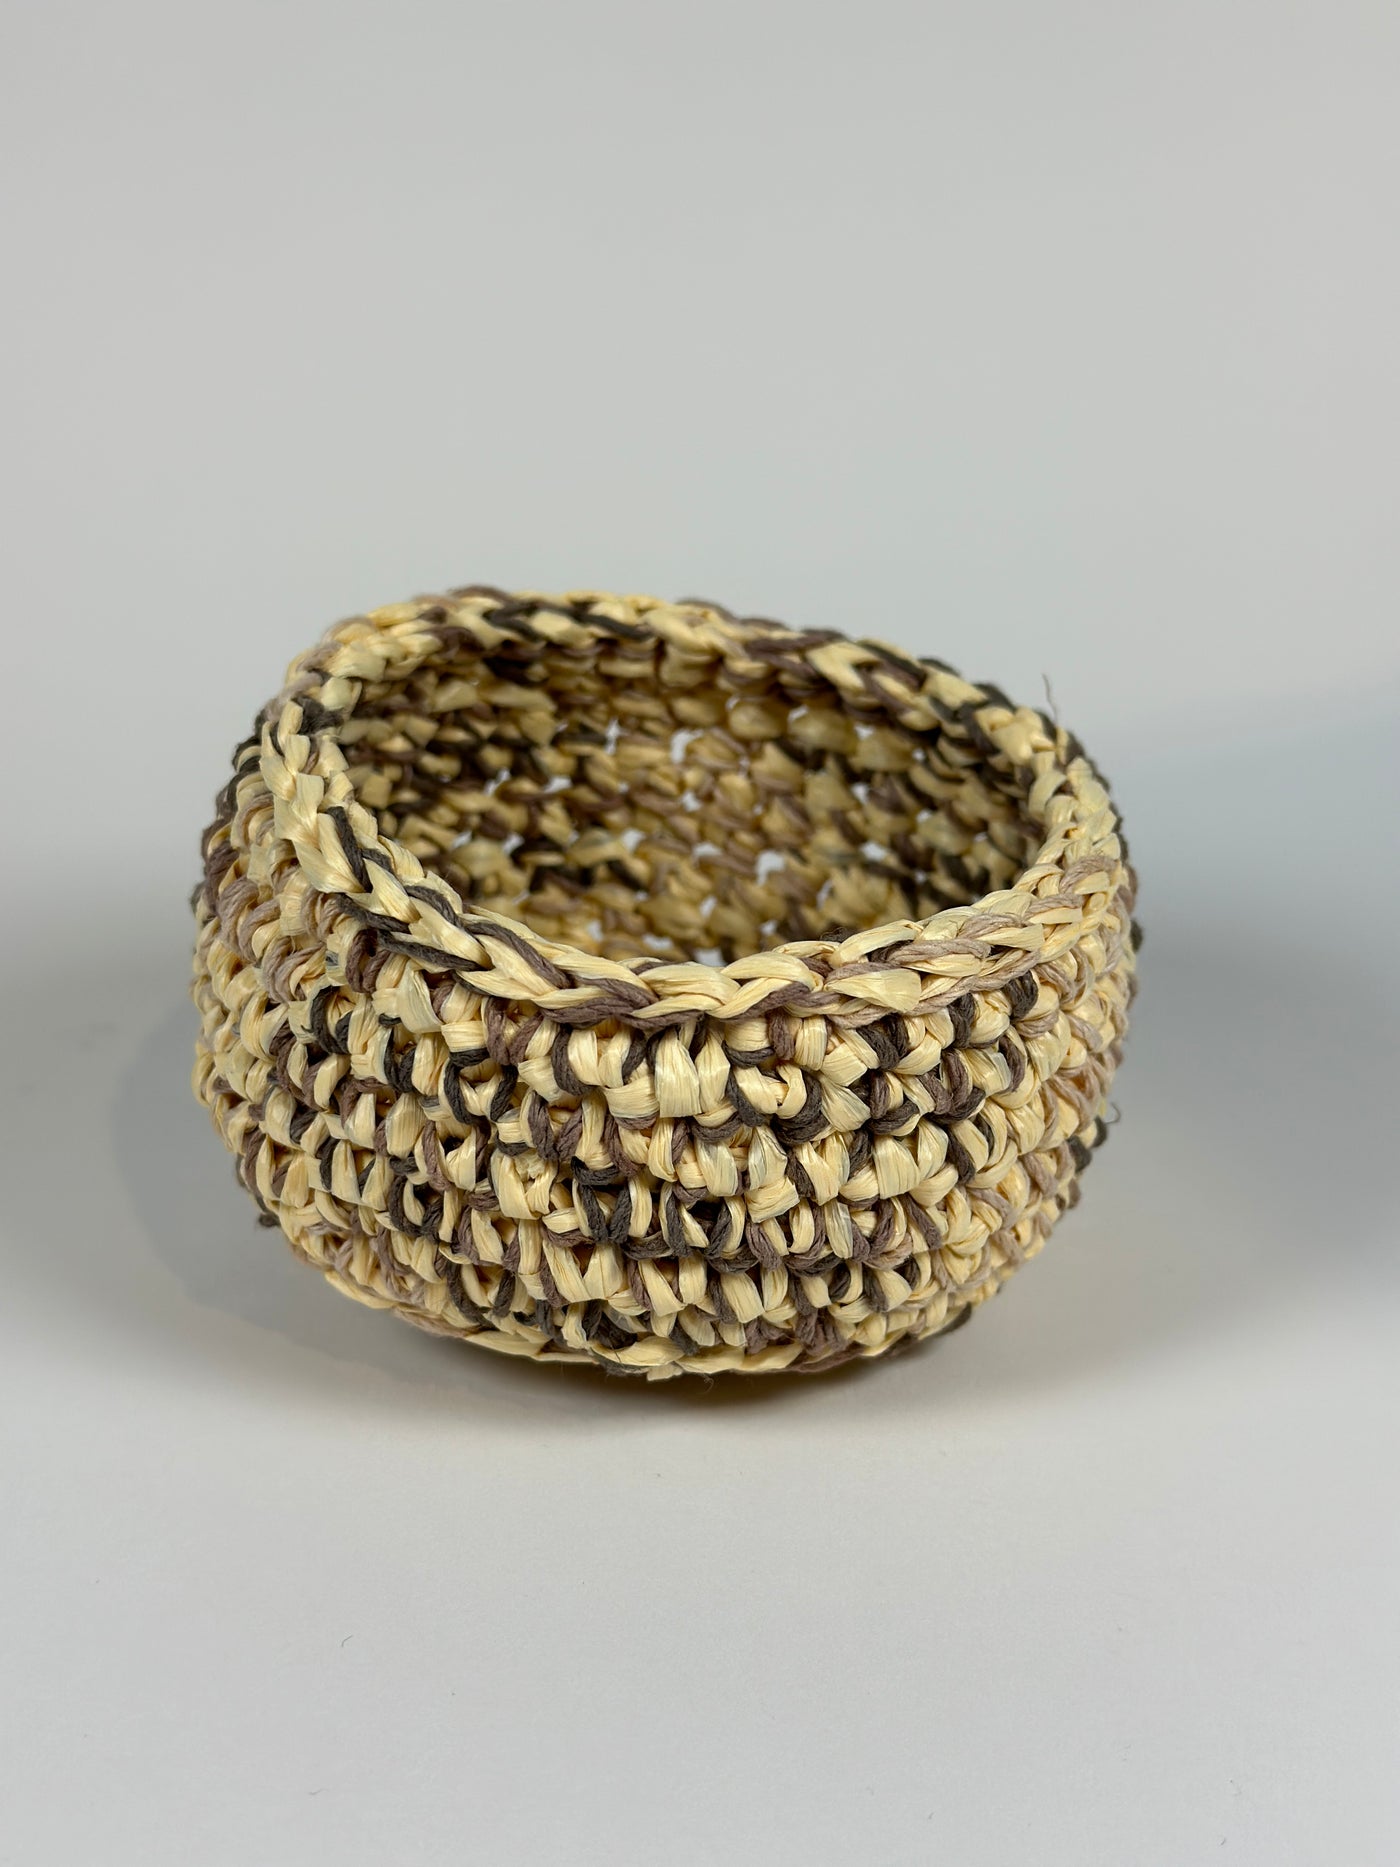 Crocheted Basket by Gay Steinhorn - The Grey Pearl